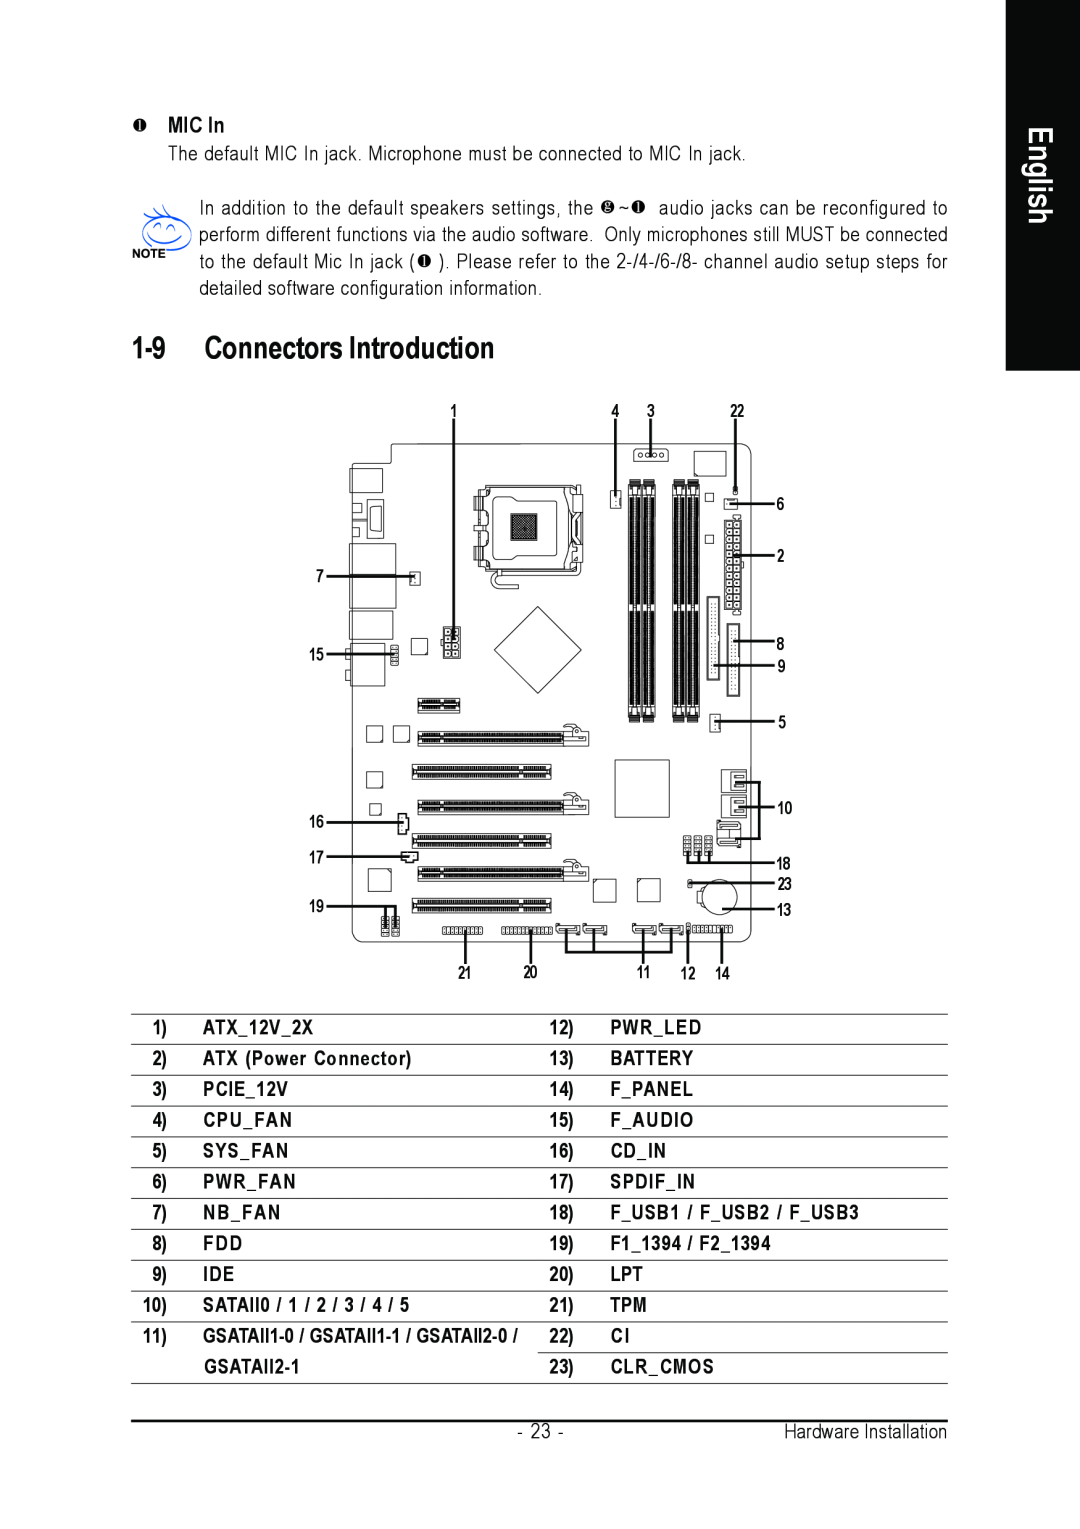 Intel GA-N680SLI-DQ6 user manual Connectors Introduction, MIC In, English 